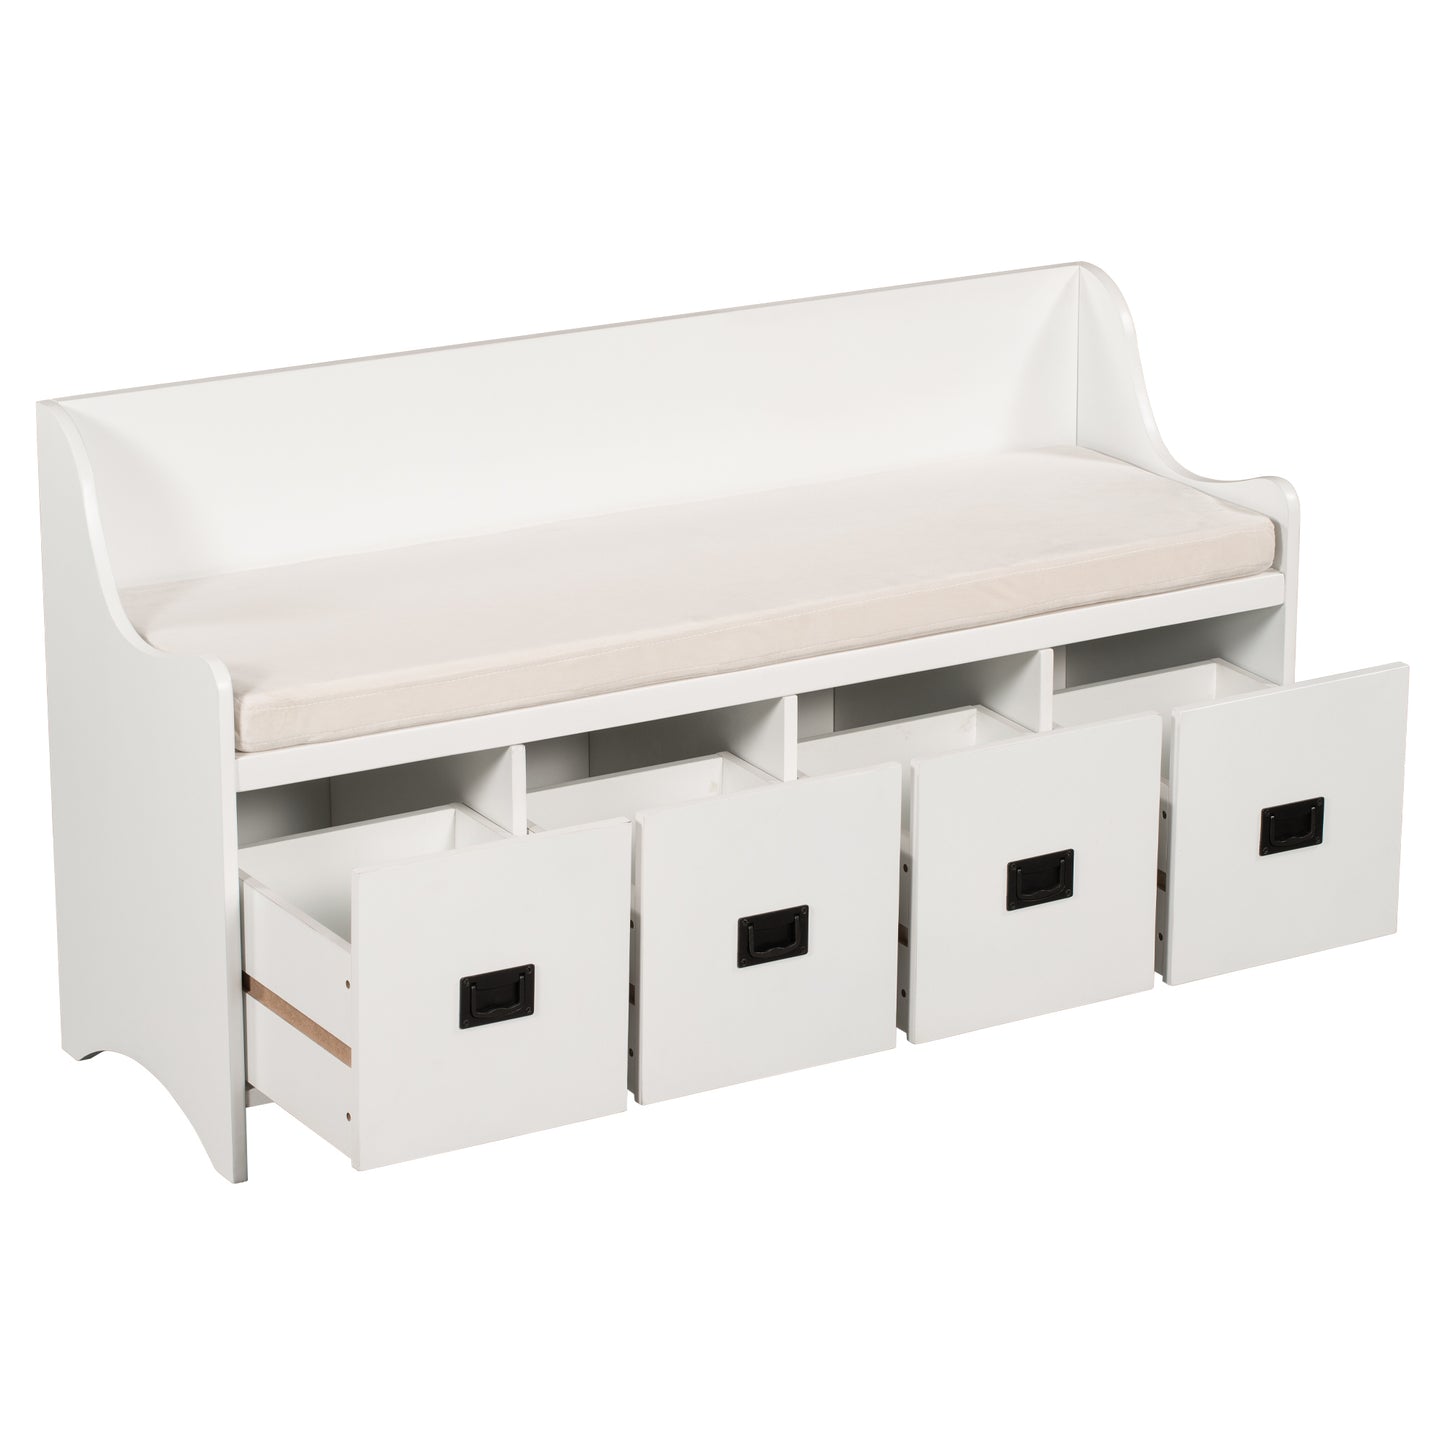 TREXM Entryway Storage Bench with Backrest - White